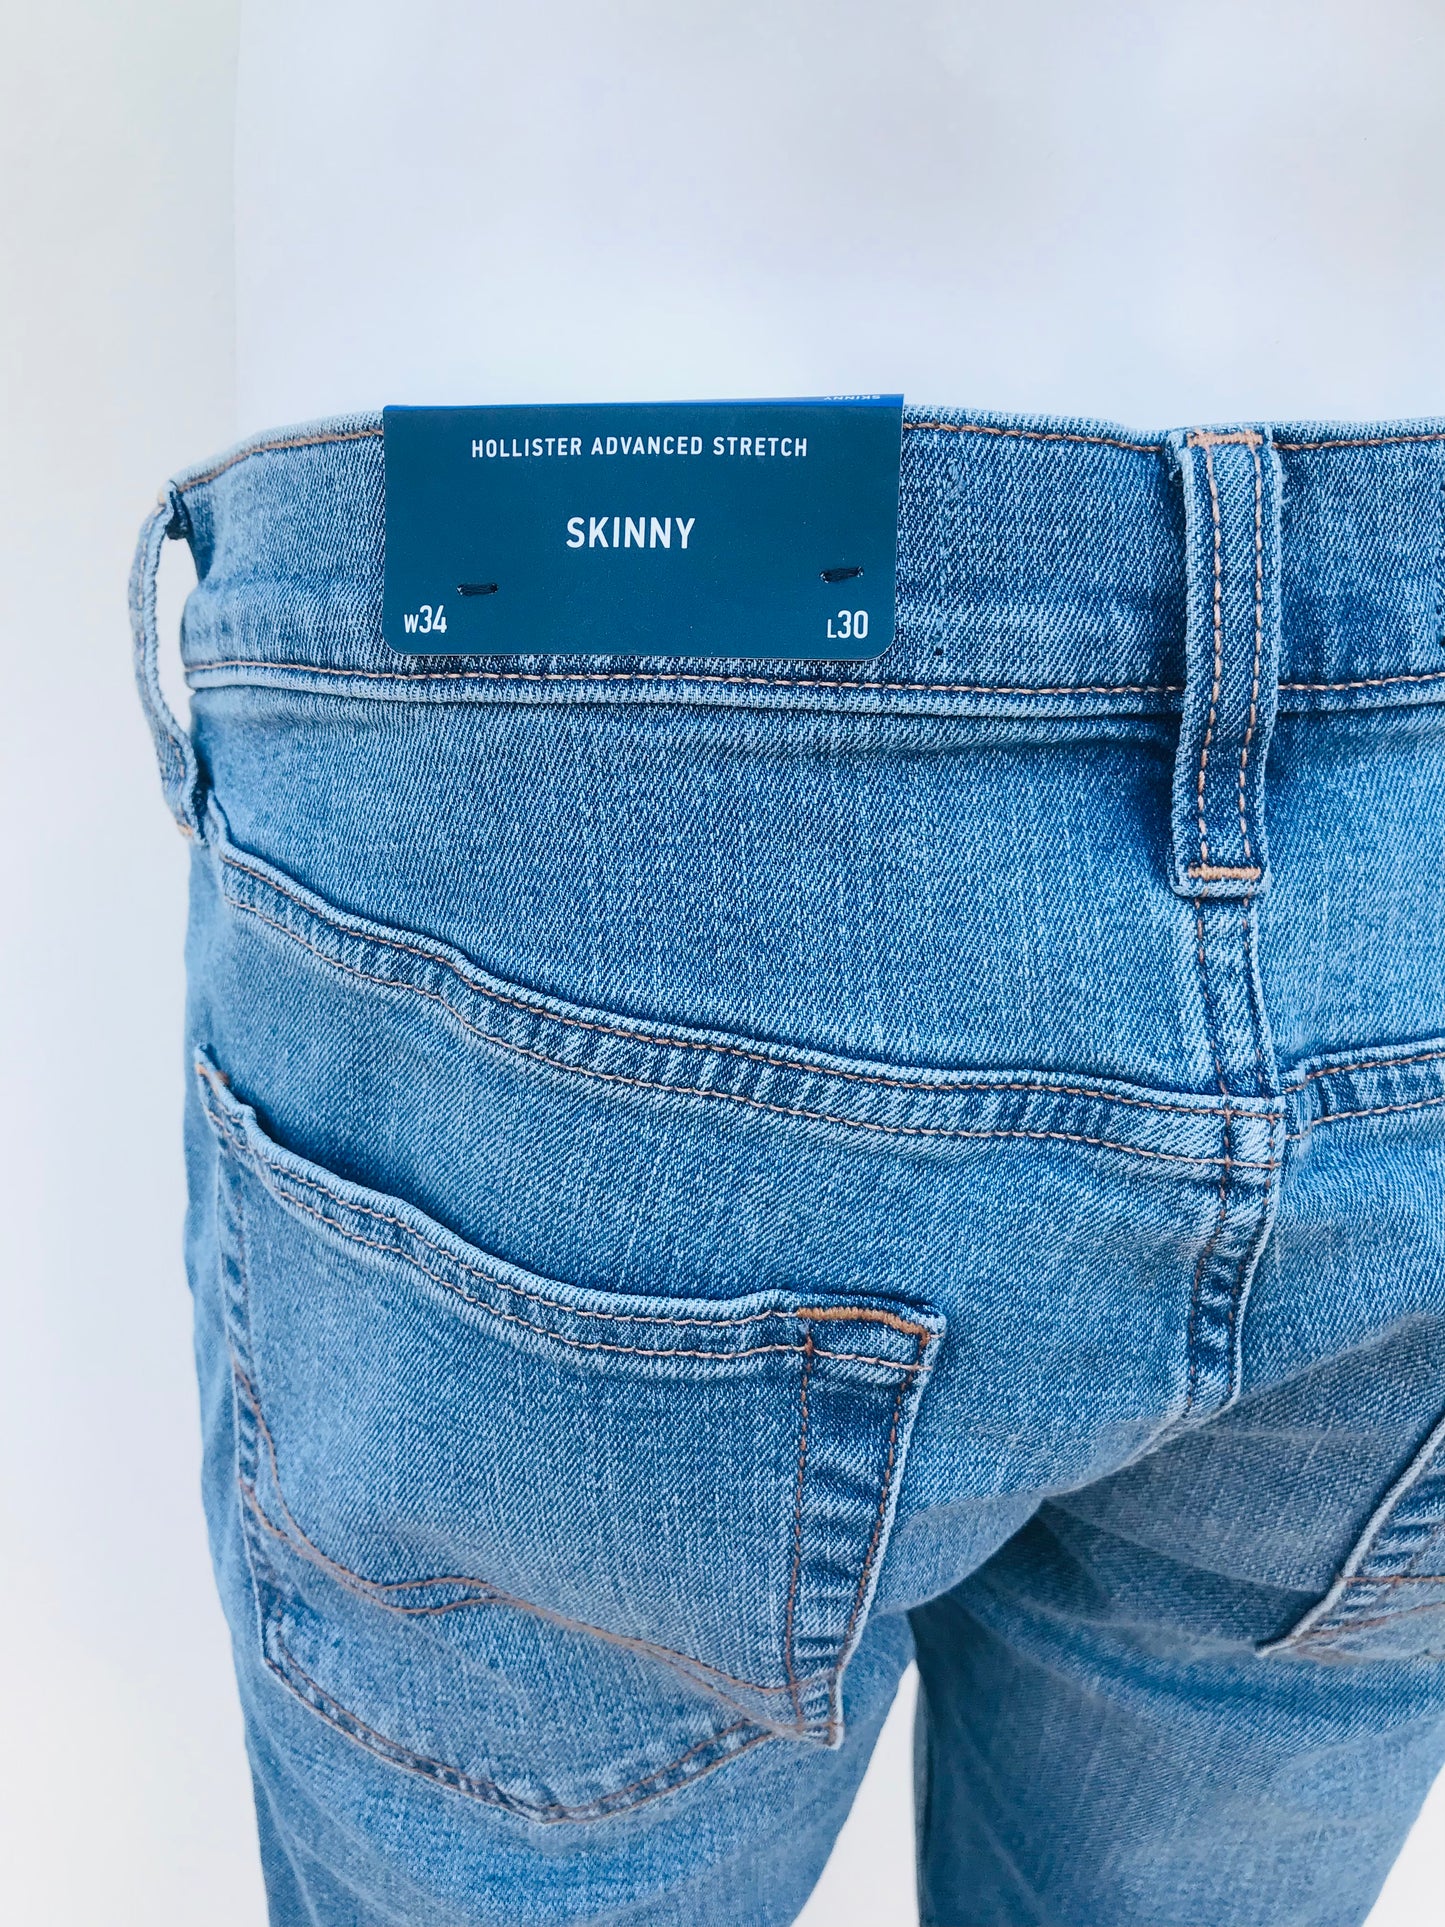 Pantalón jeans HOLLISTER ADVANCE STRETCH original, azul claro liso SKINNY.